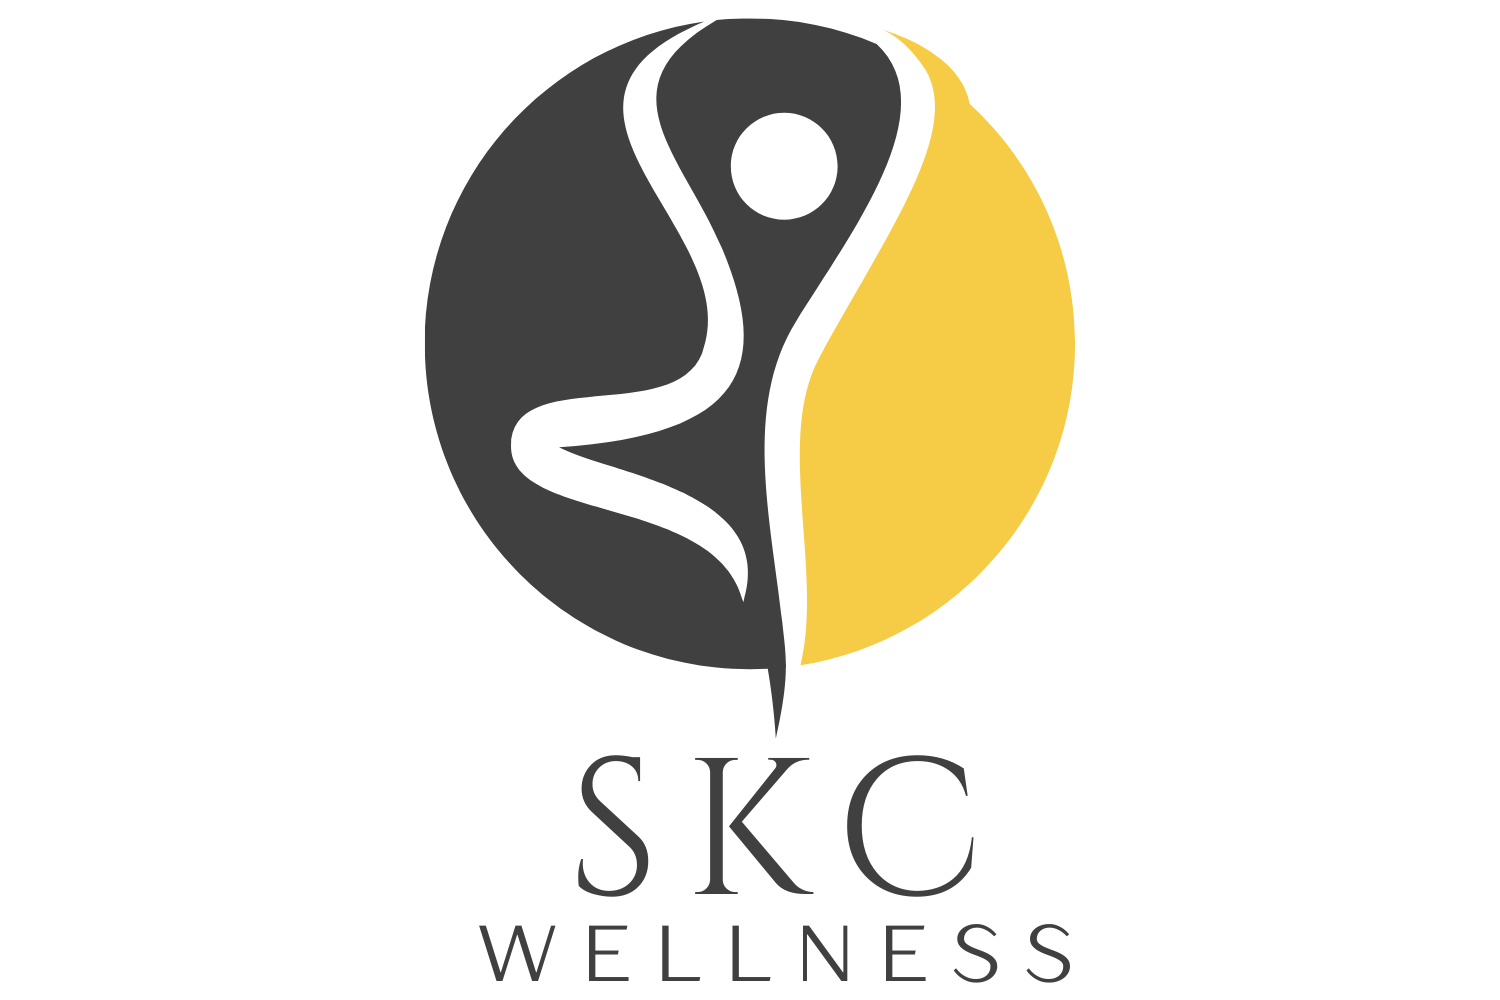 SKC Wellness Program